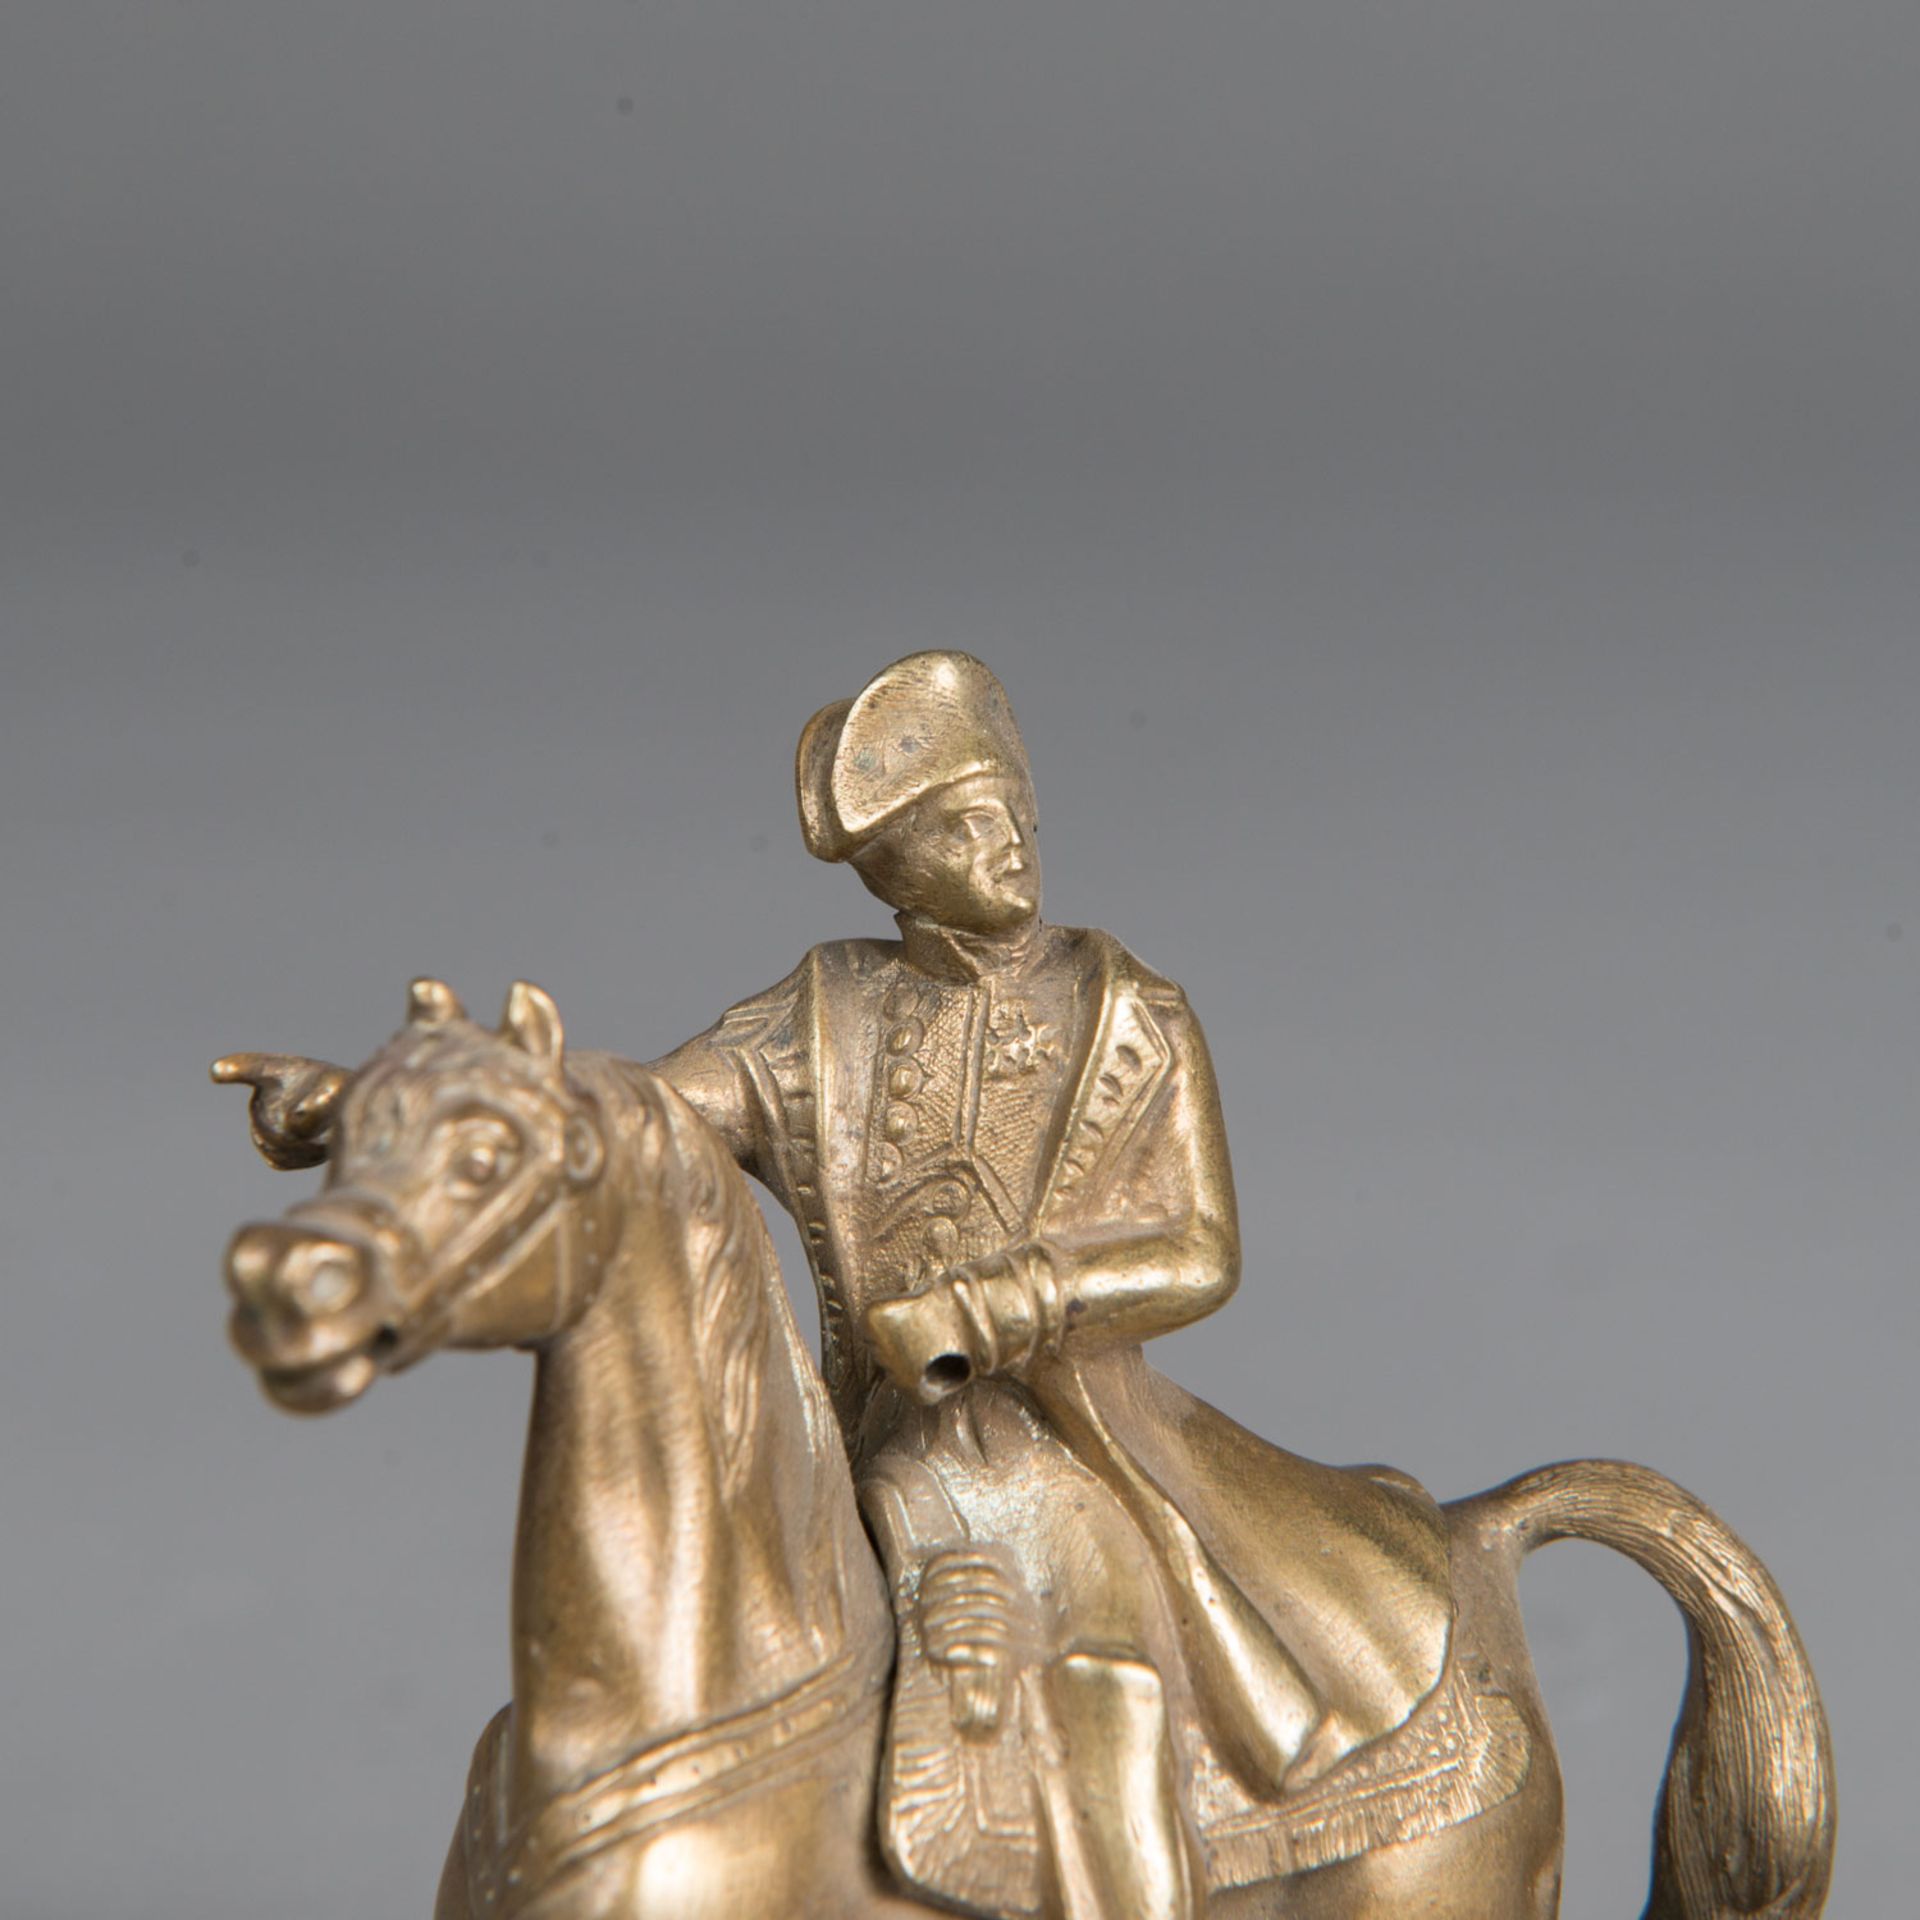 Napoleon sculpture - Image 3 of 3